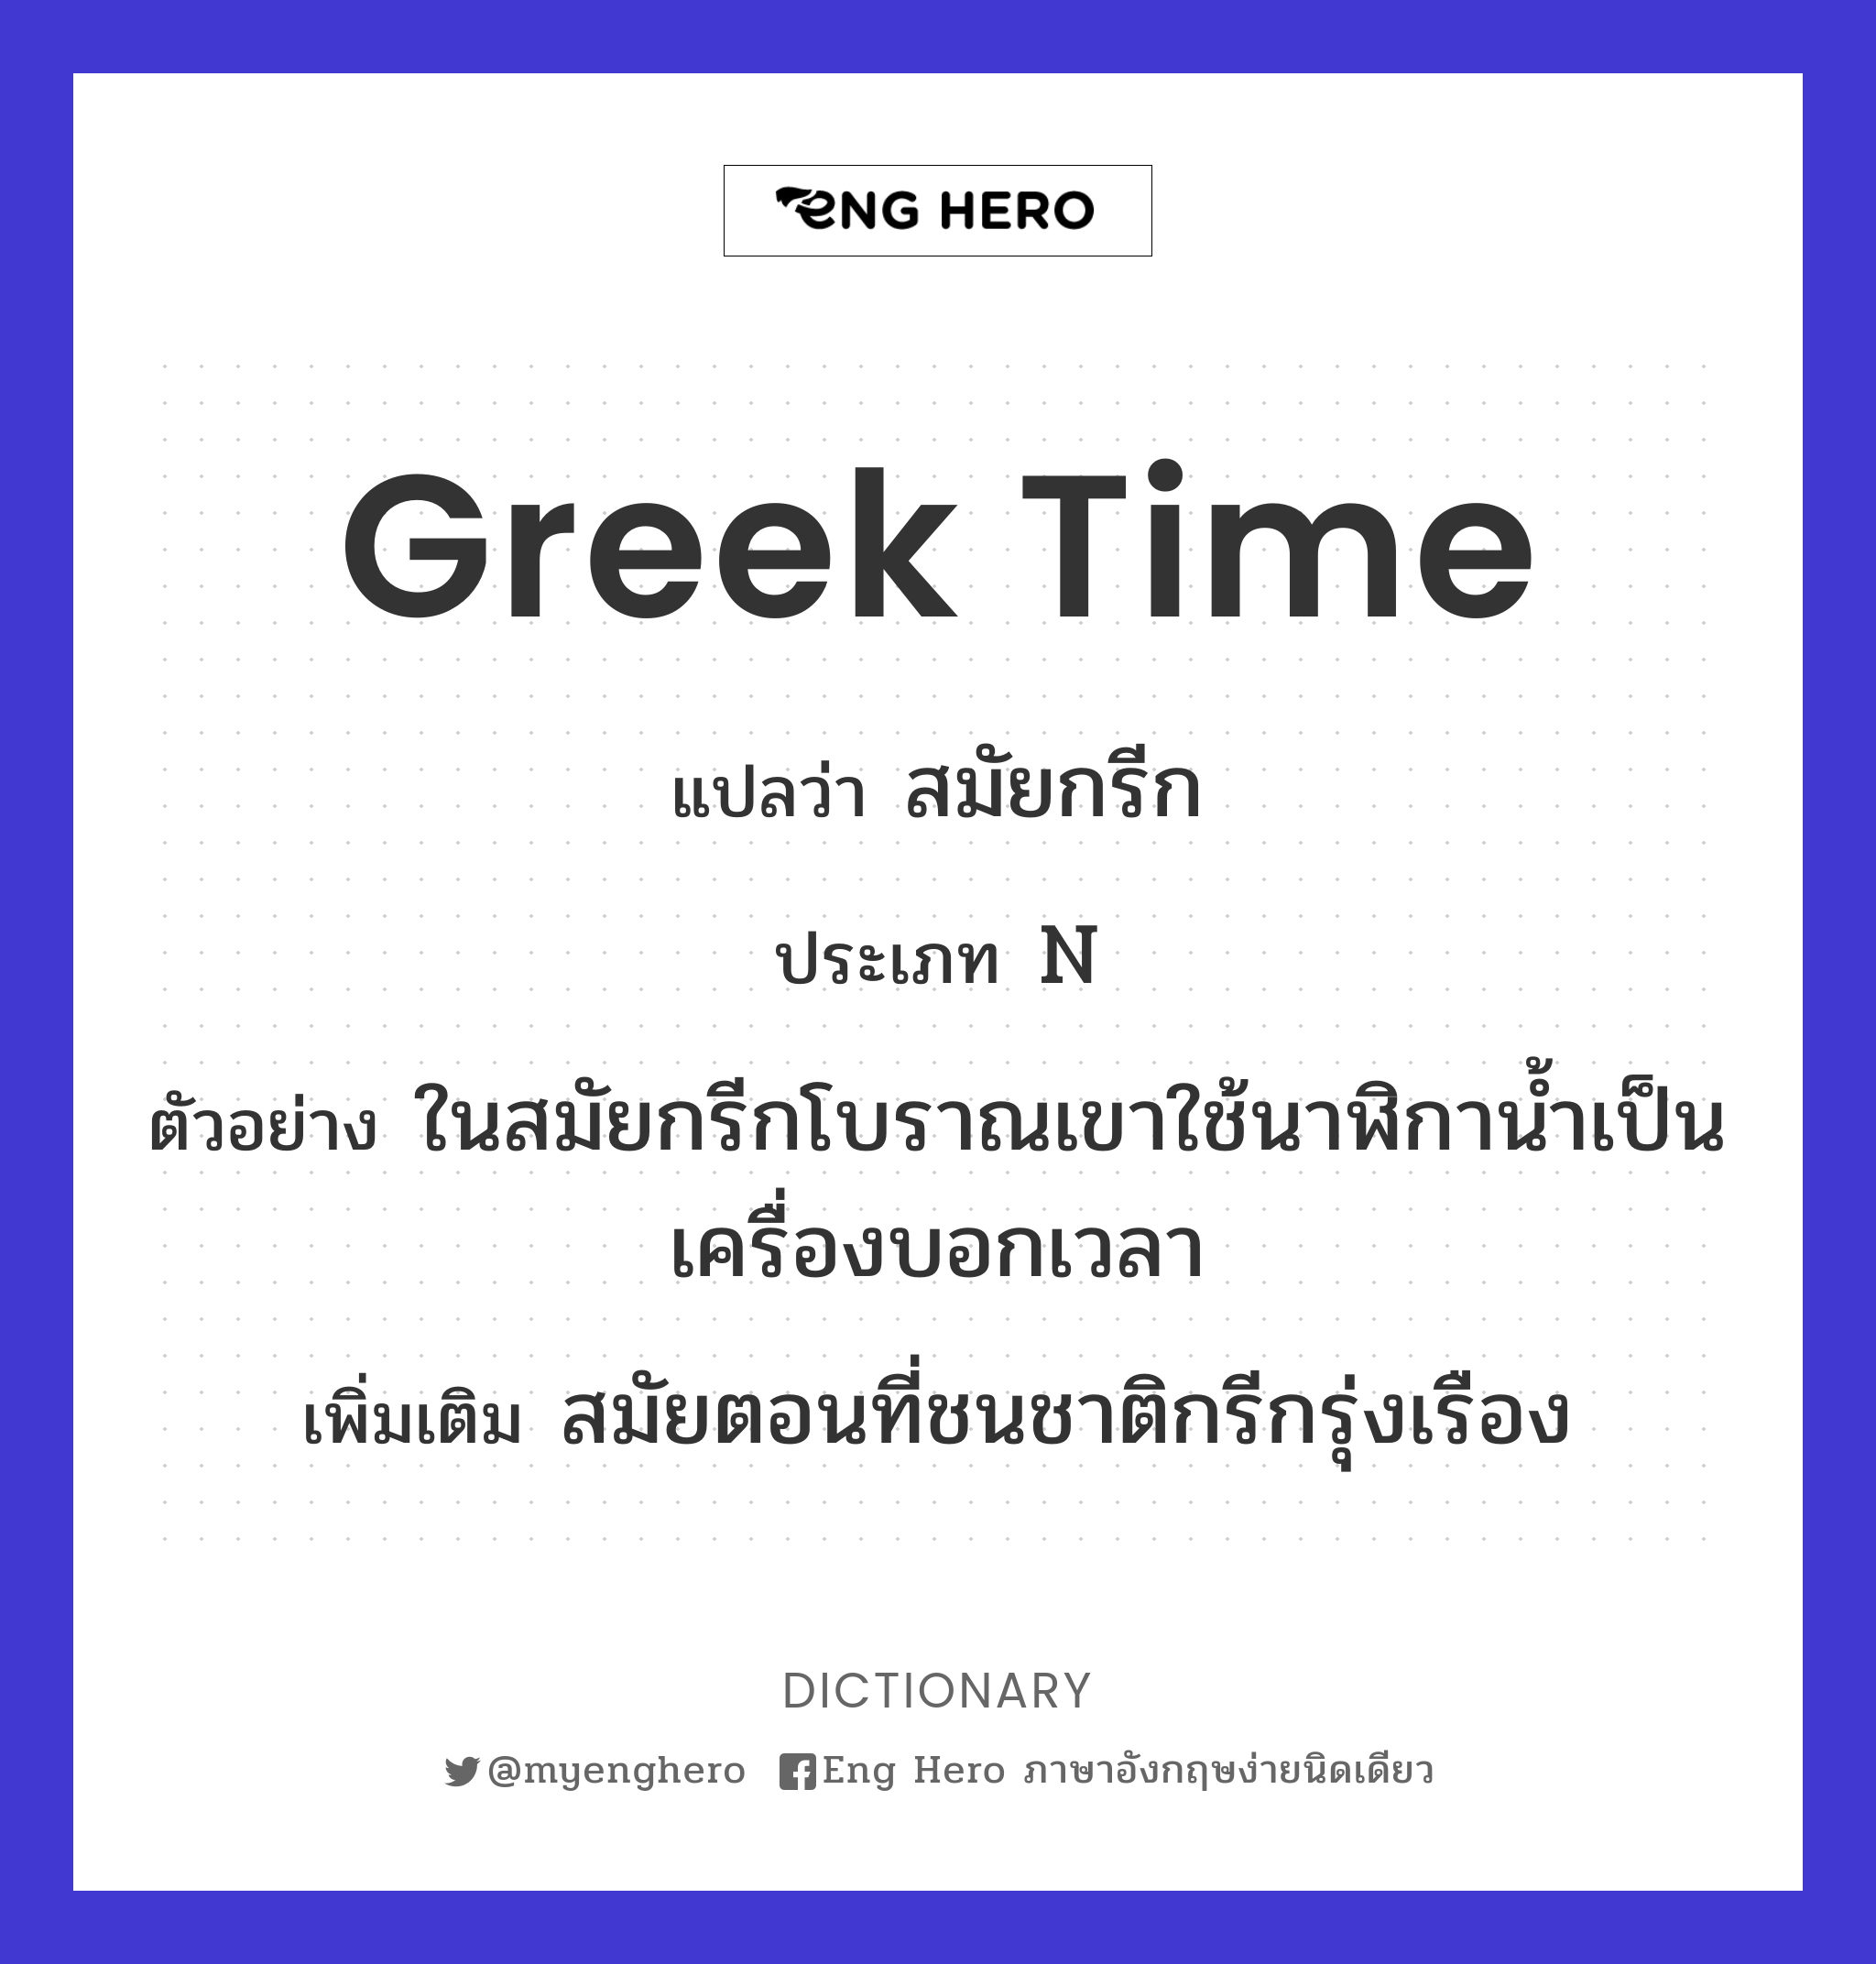 Greek time